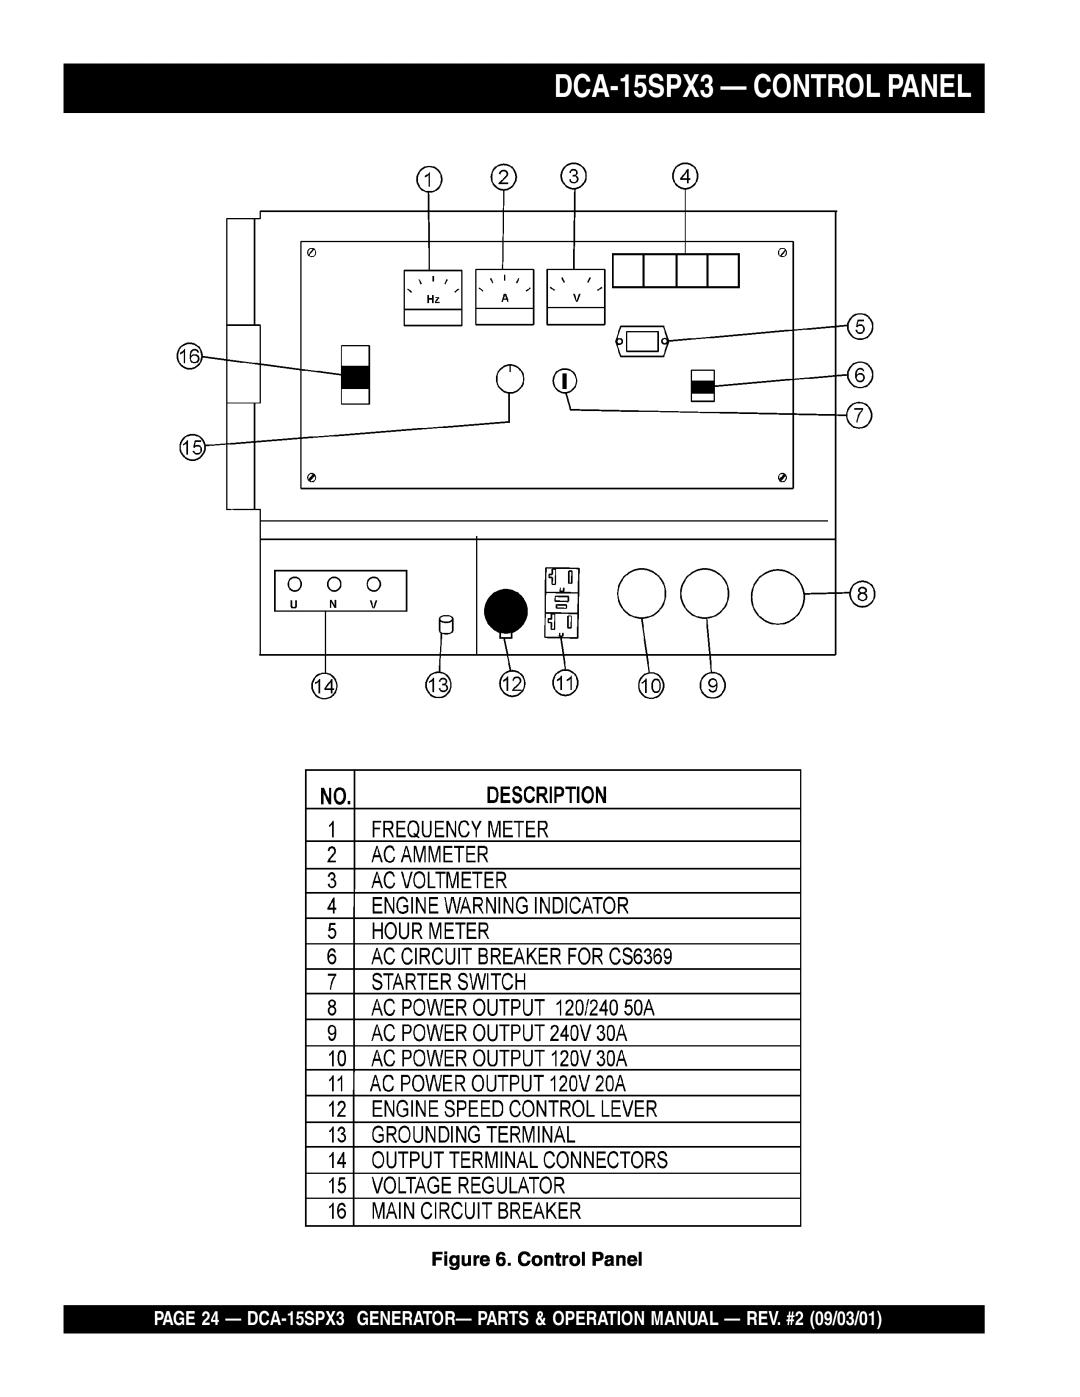 Multiquip operation manual DCA-15SPX3— CONTROL PANEL, Control Panel 